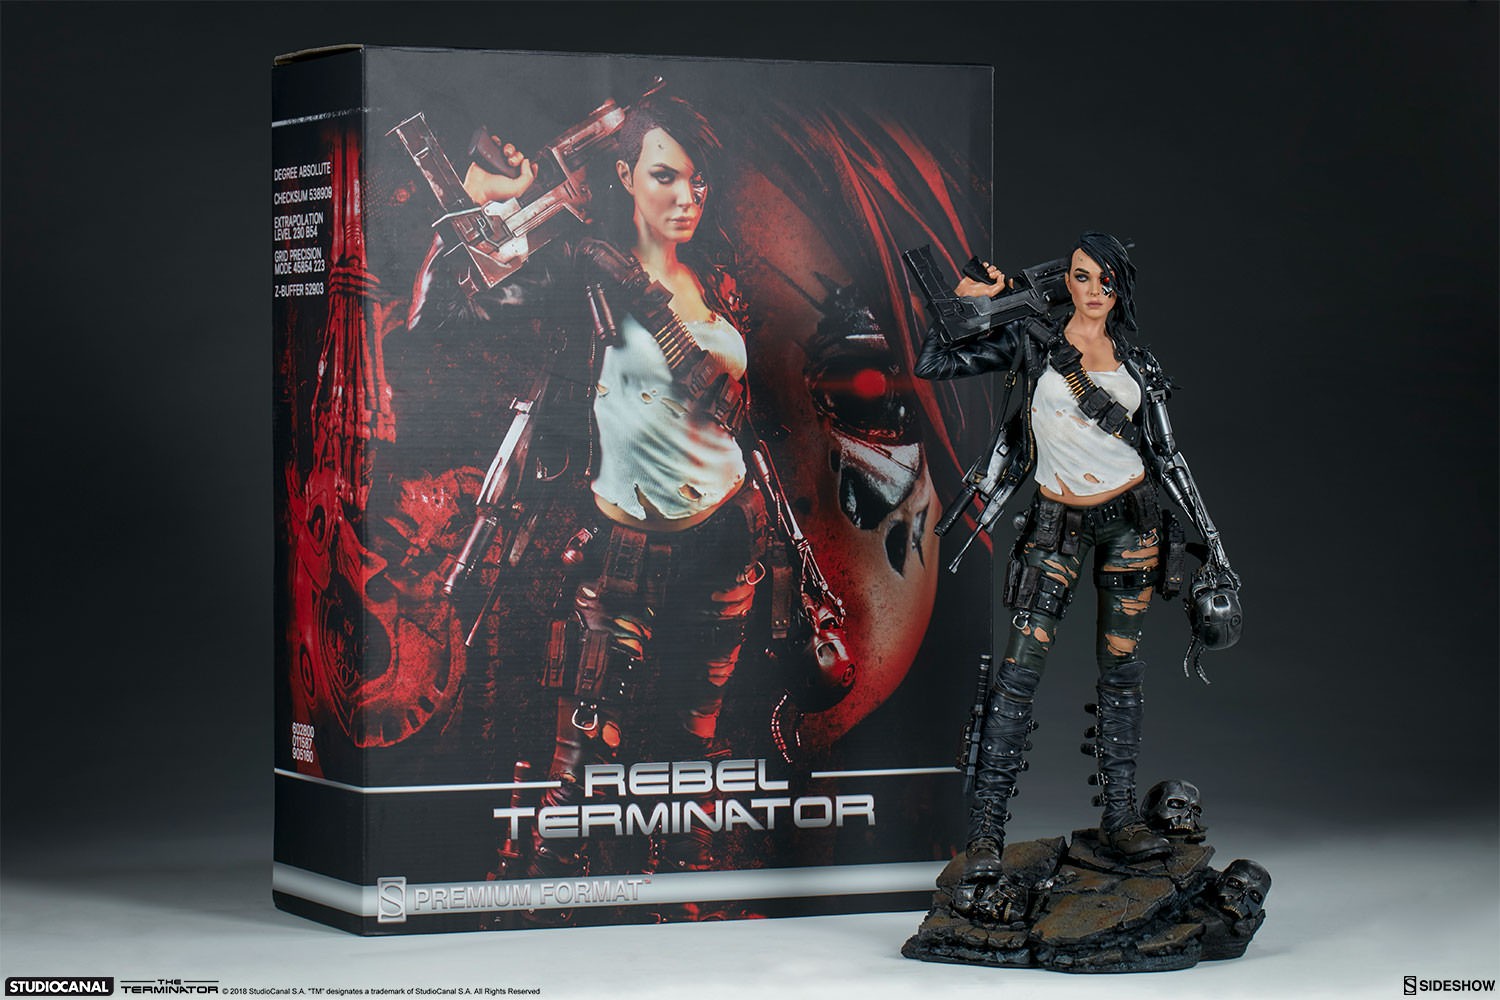 Rebel Terminator Collector Edition View 34